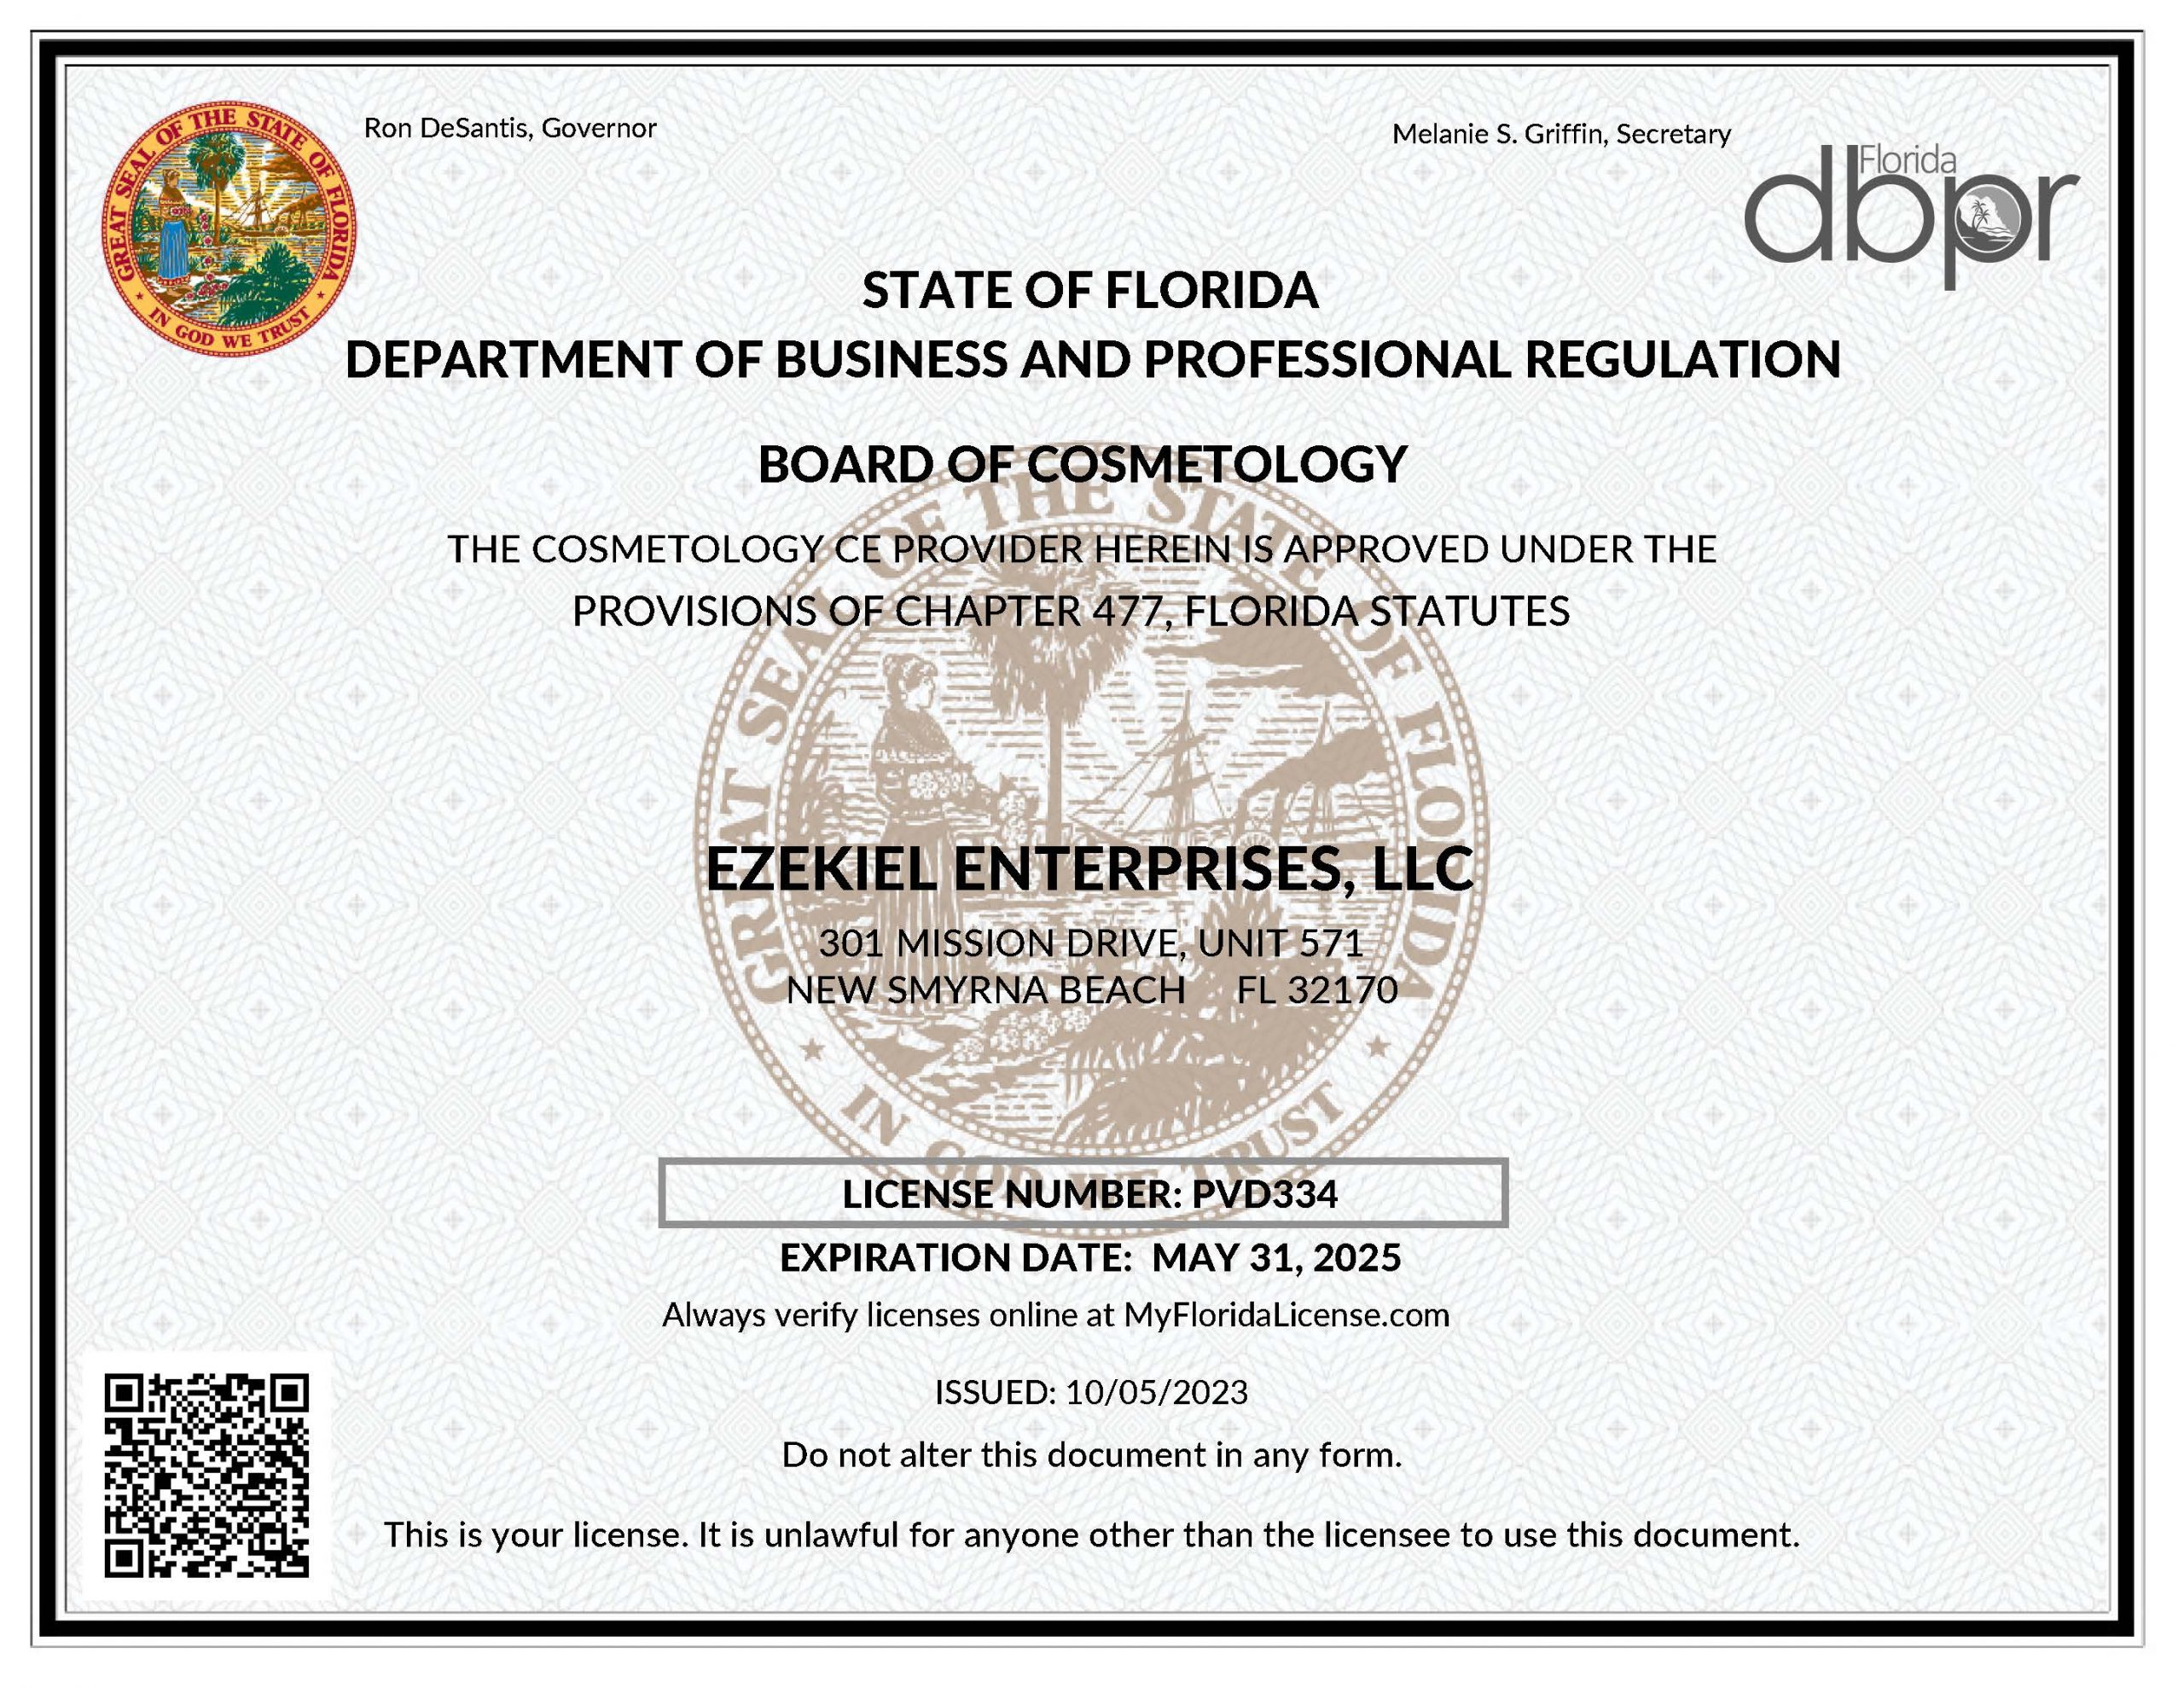 Florida Cosmetology Board License for Ezekiel Enterprises, LLC